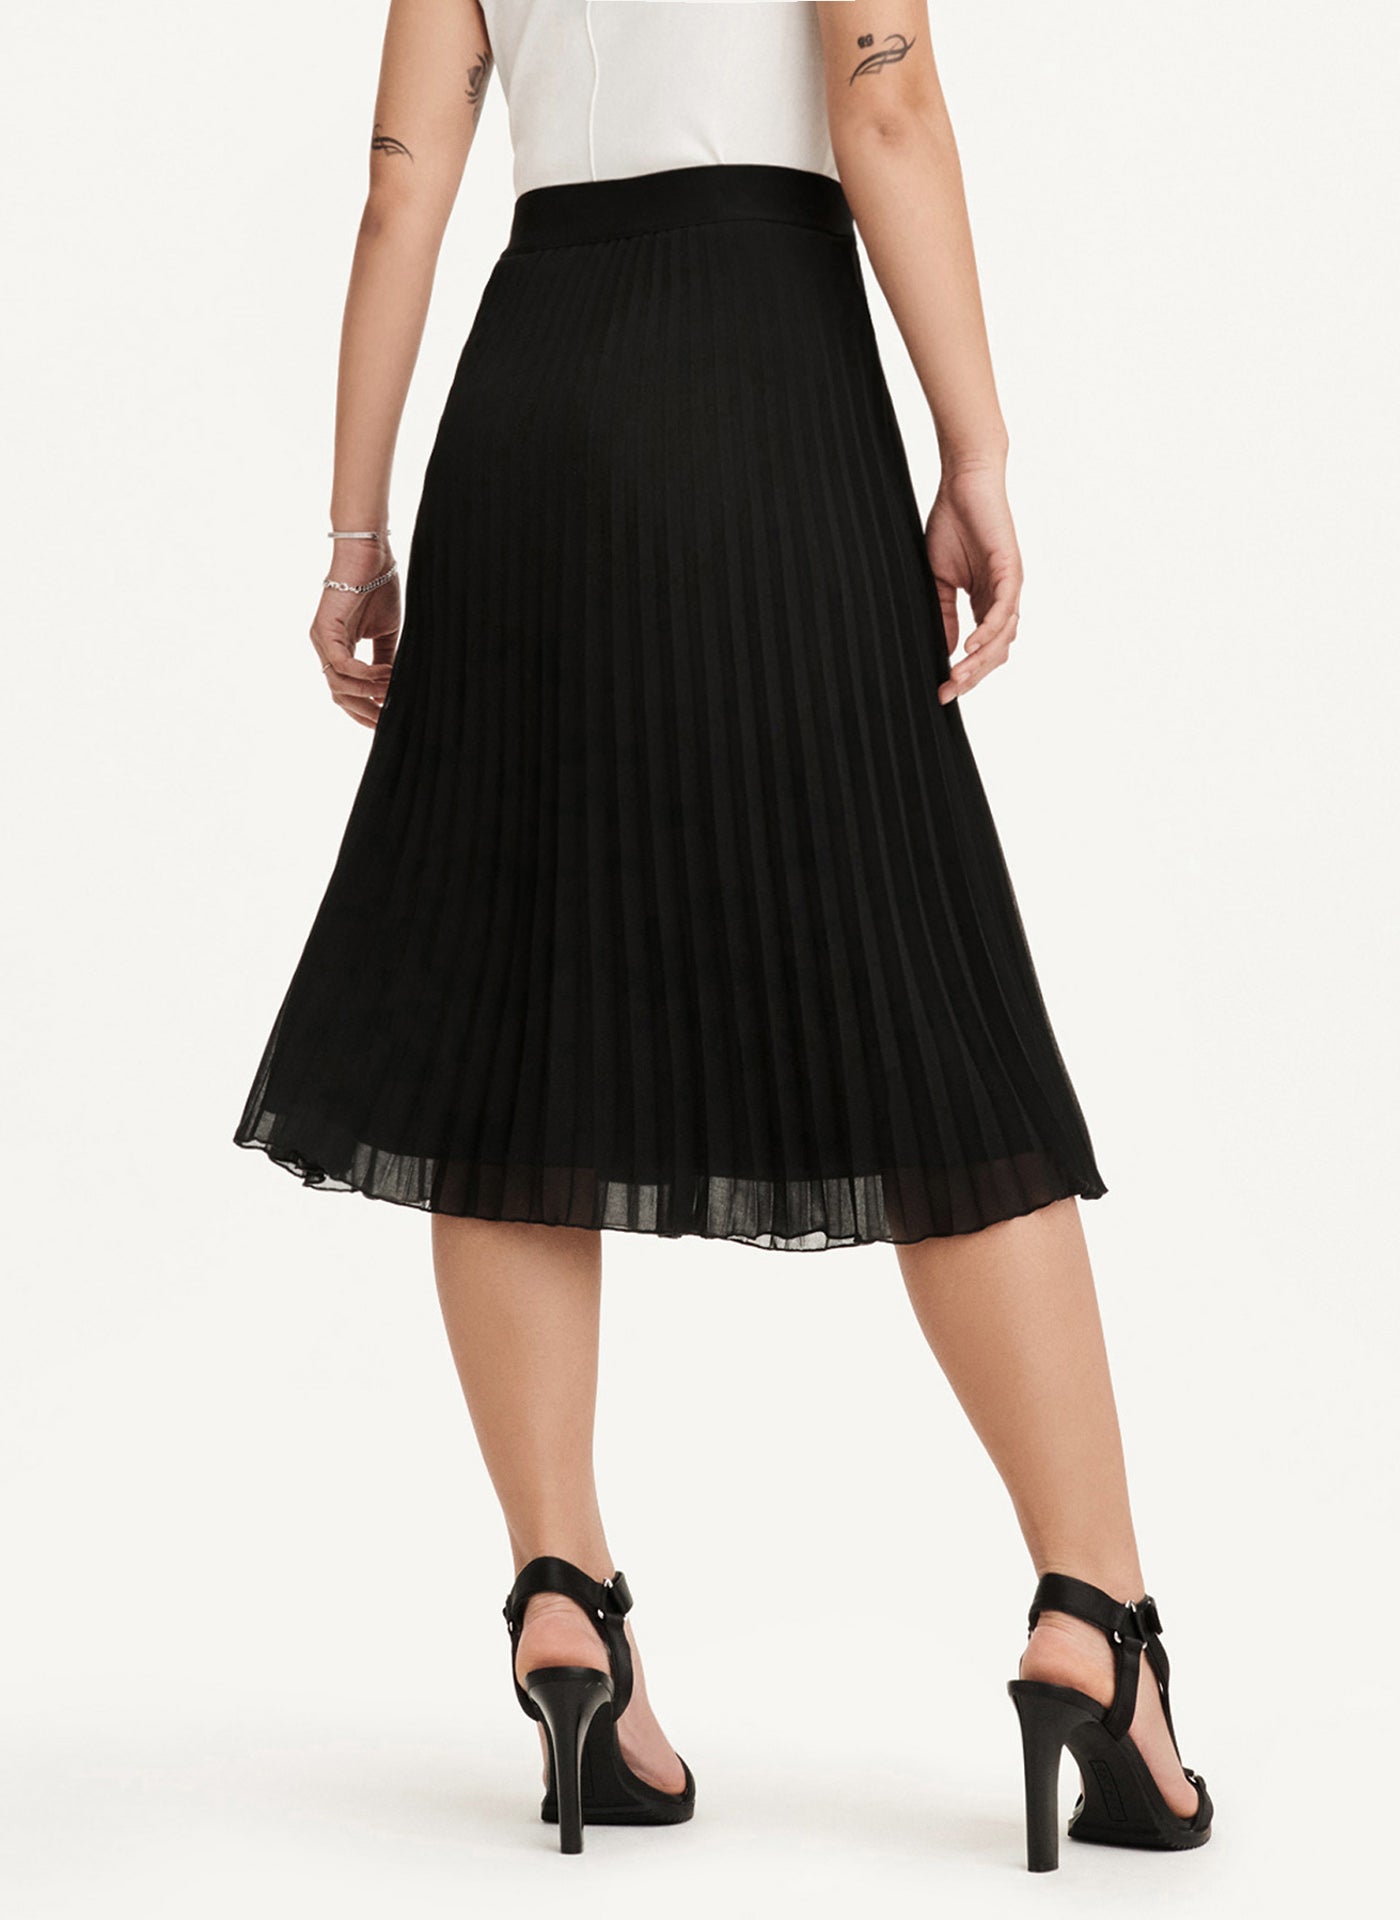 SHUSHU/TONG Black Pleated Maxi Skirt - ShopStyle